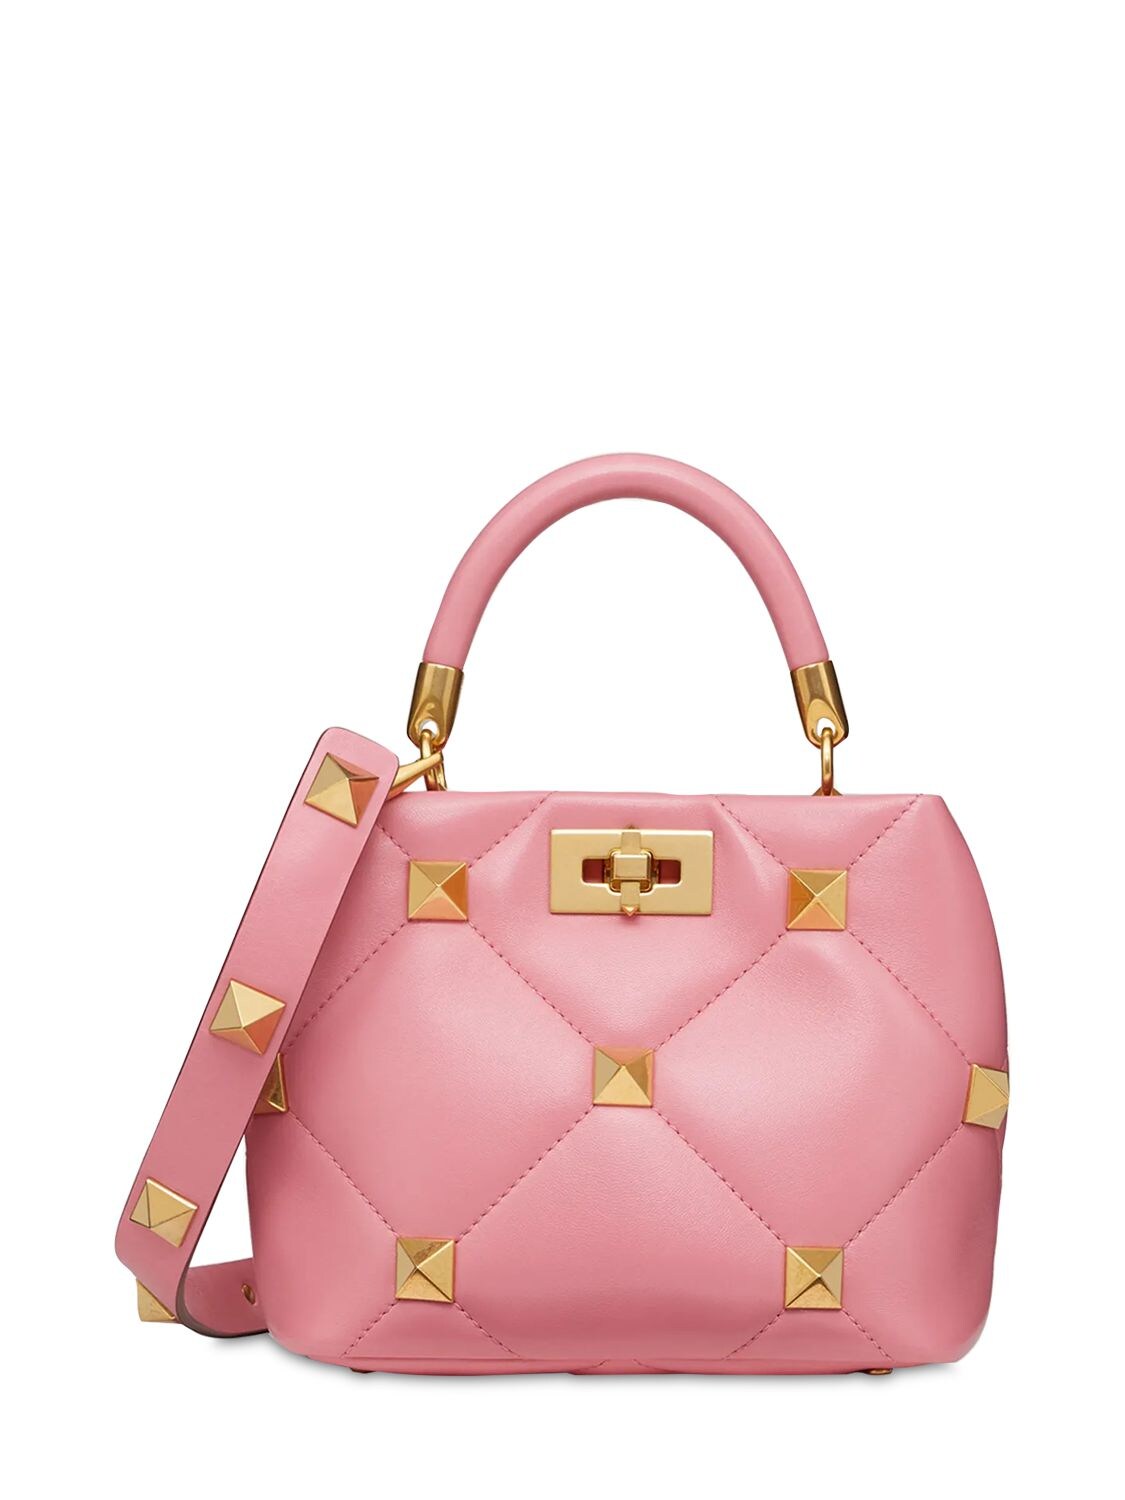 Valentino Garavani Small Roman Studded Leather Bag In Flamingo Pink